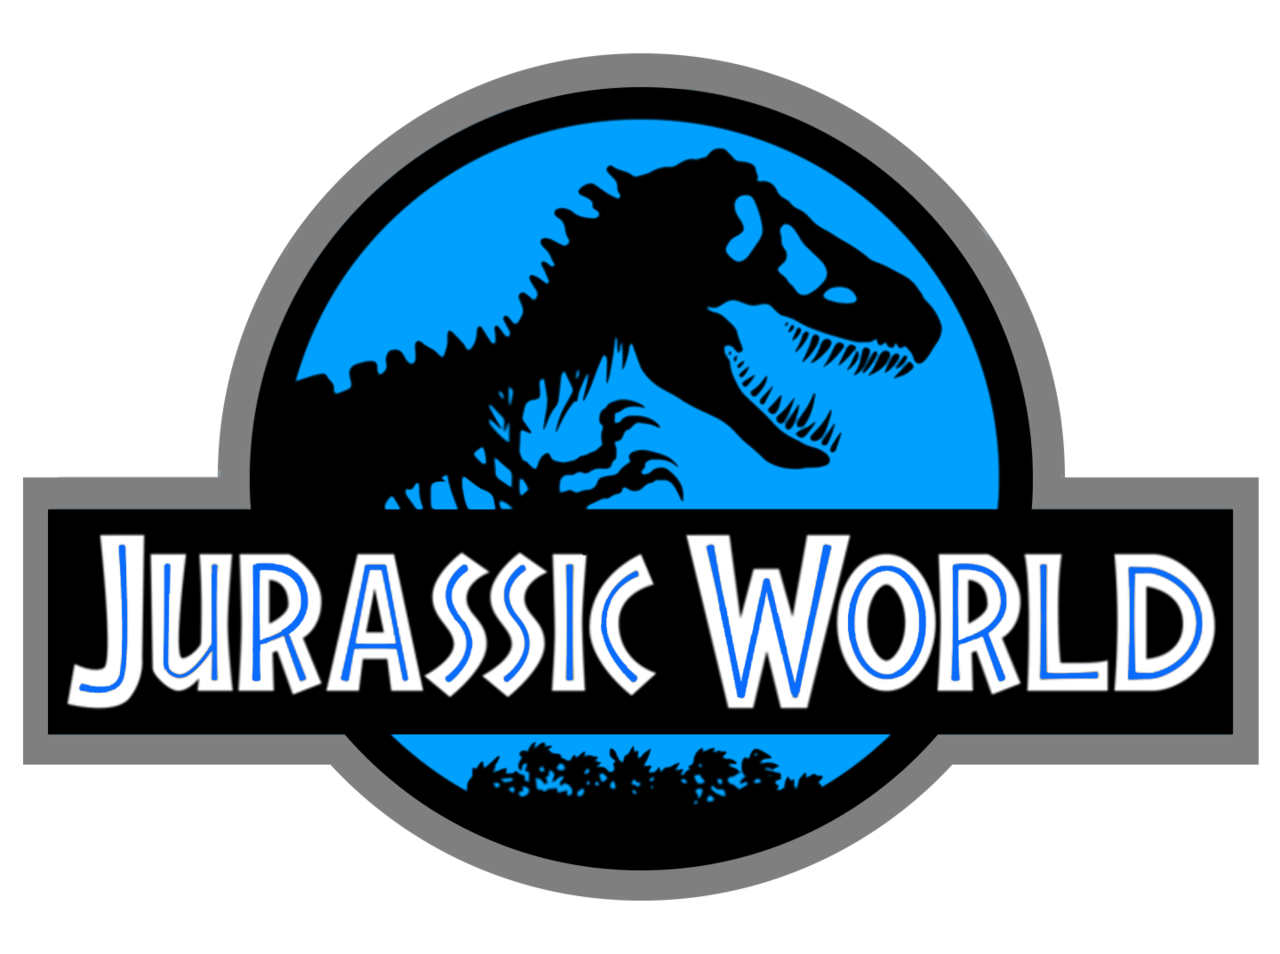 jurassic world logo vector - Google Search